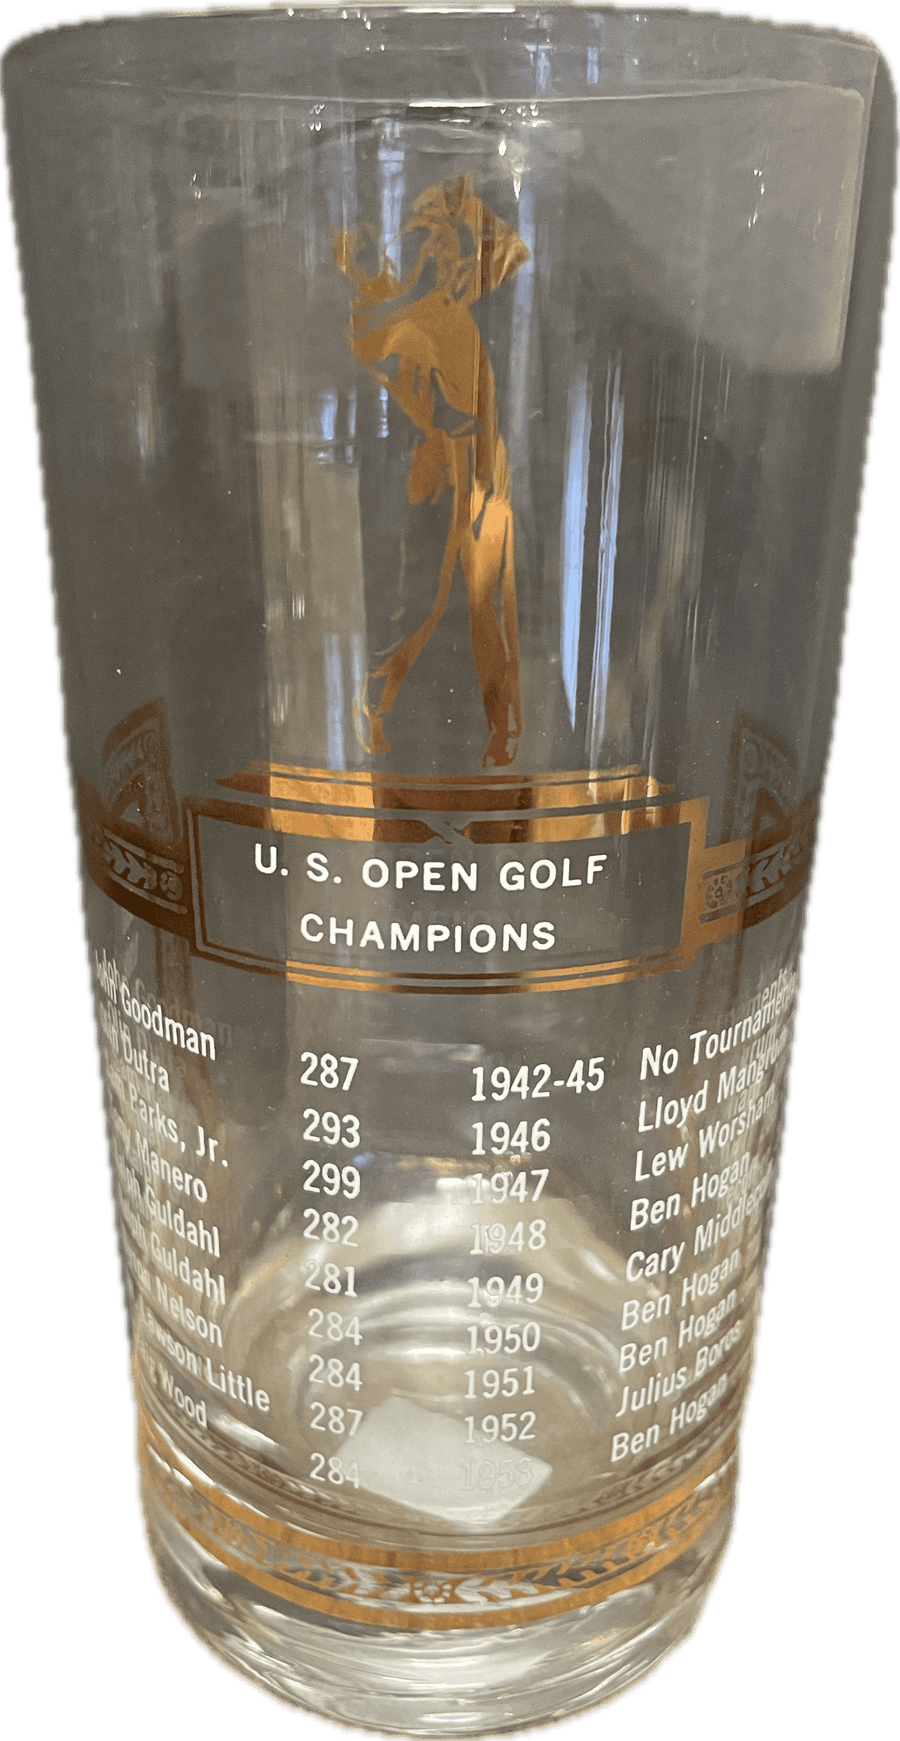 Vintage Sports Theme Glassware - U.S Open Golf Champions